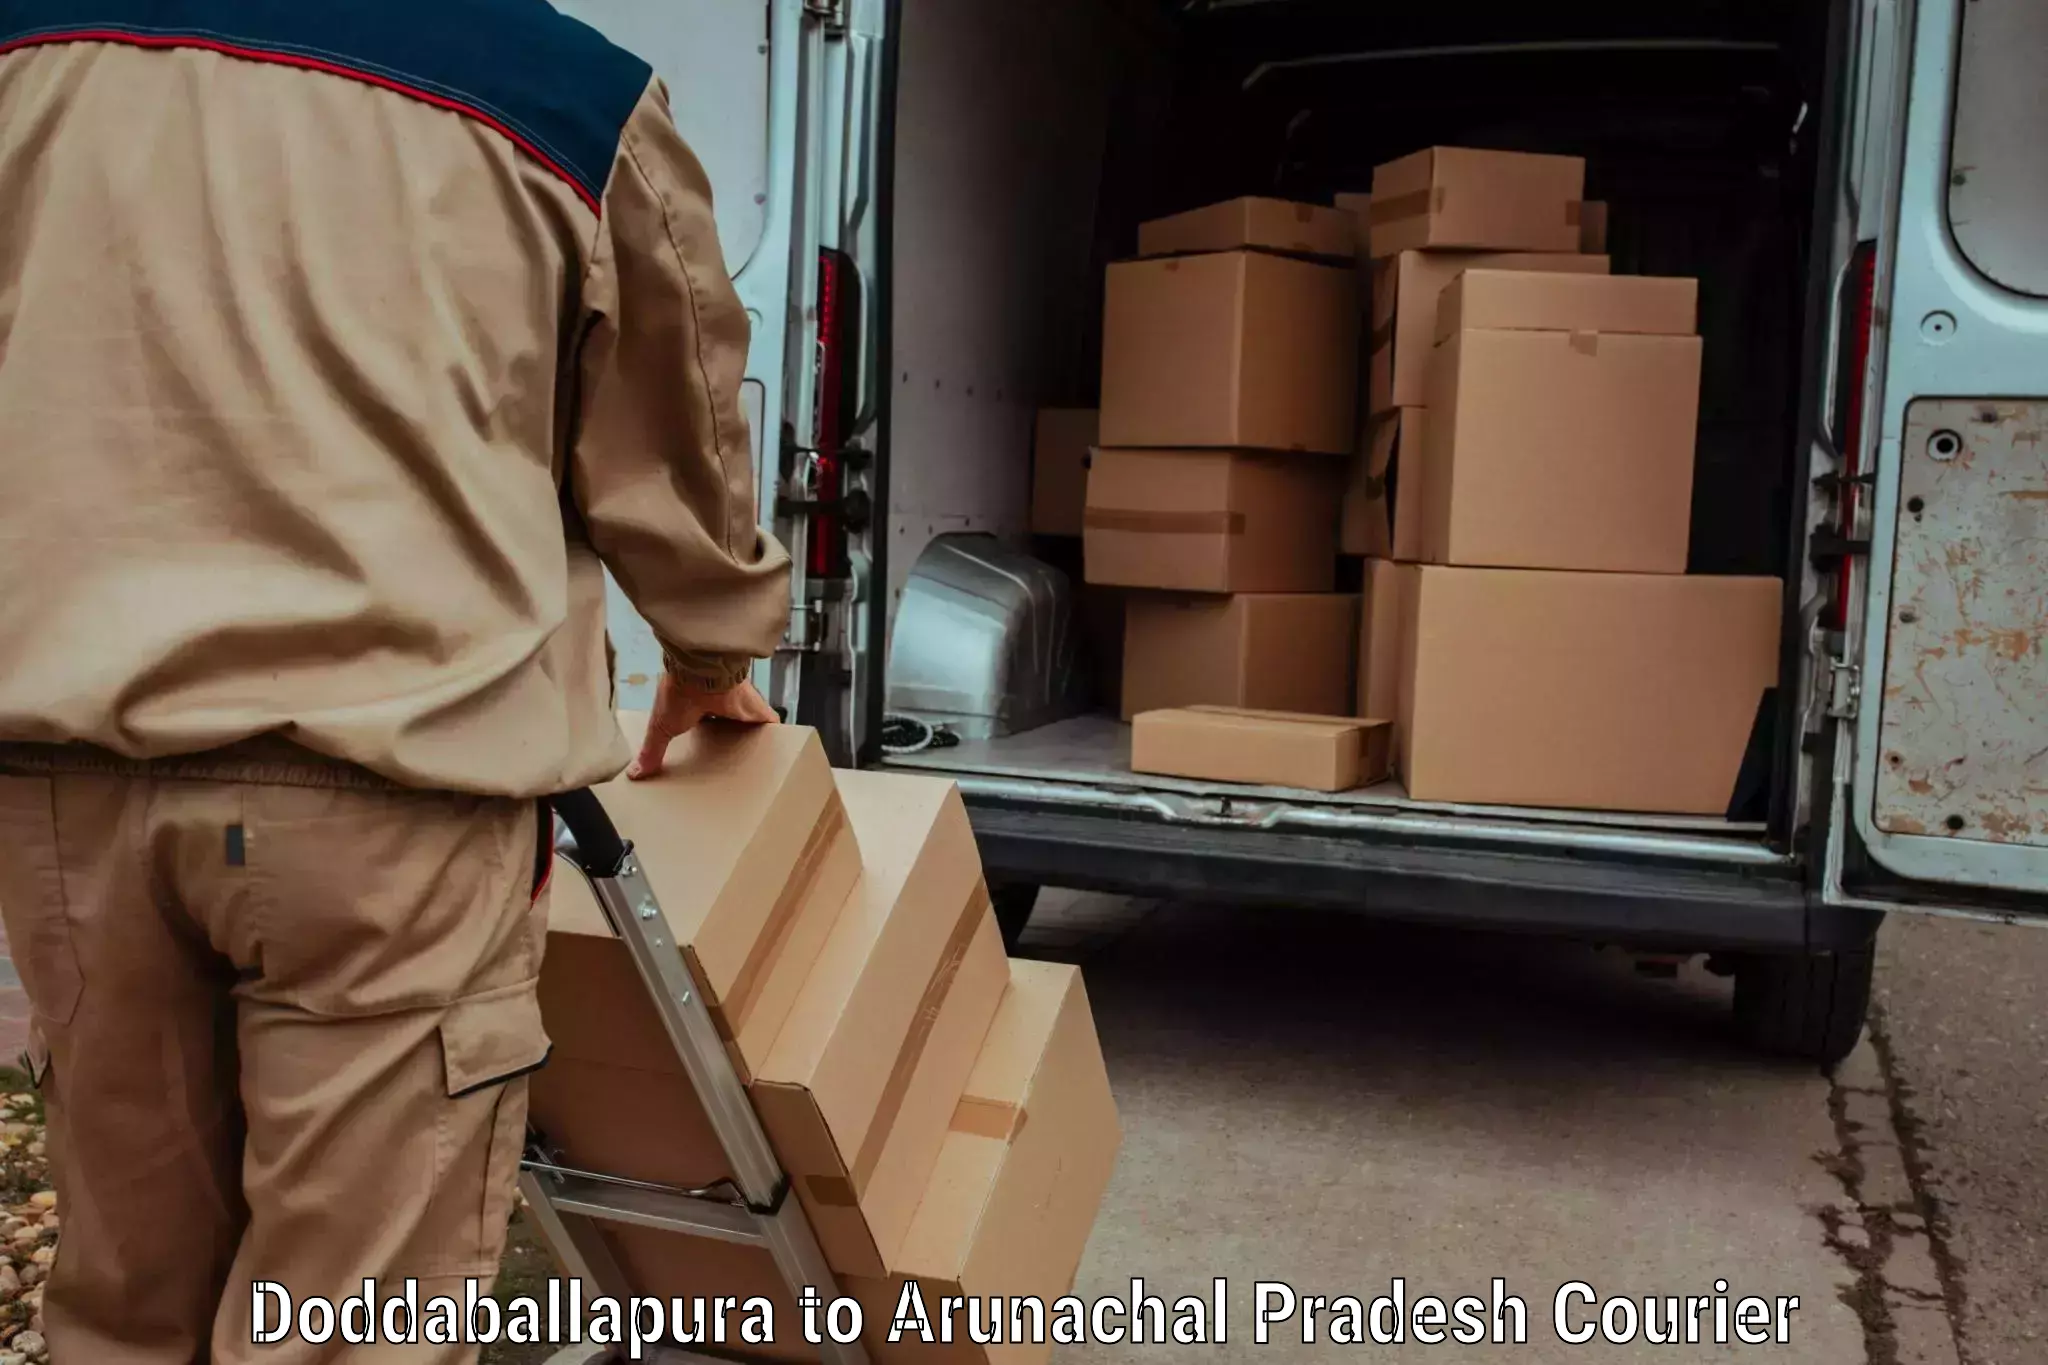 State-of-the-art courier technology Doddaballapura to Pasighat